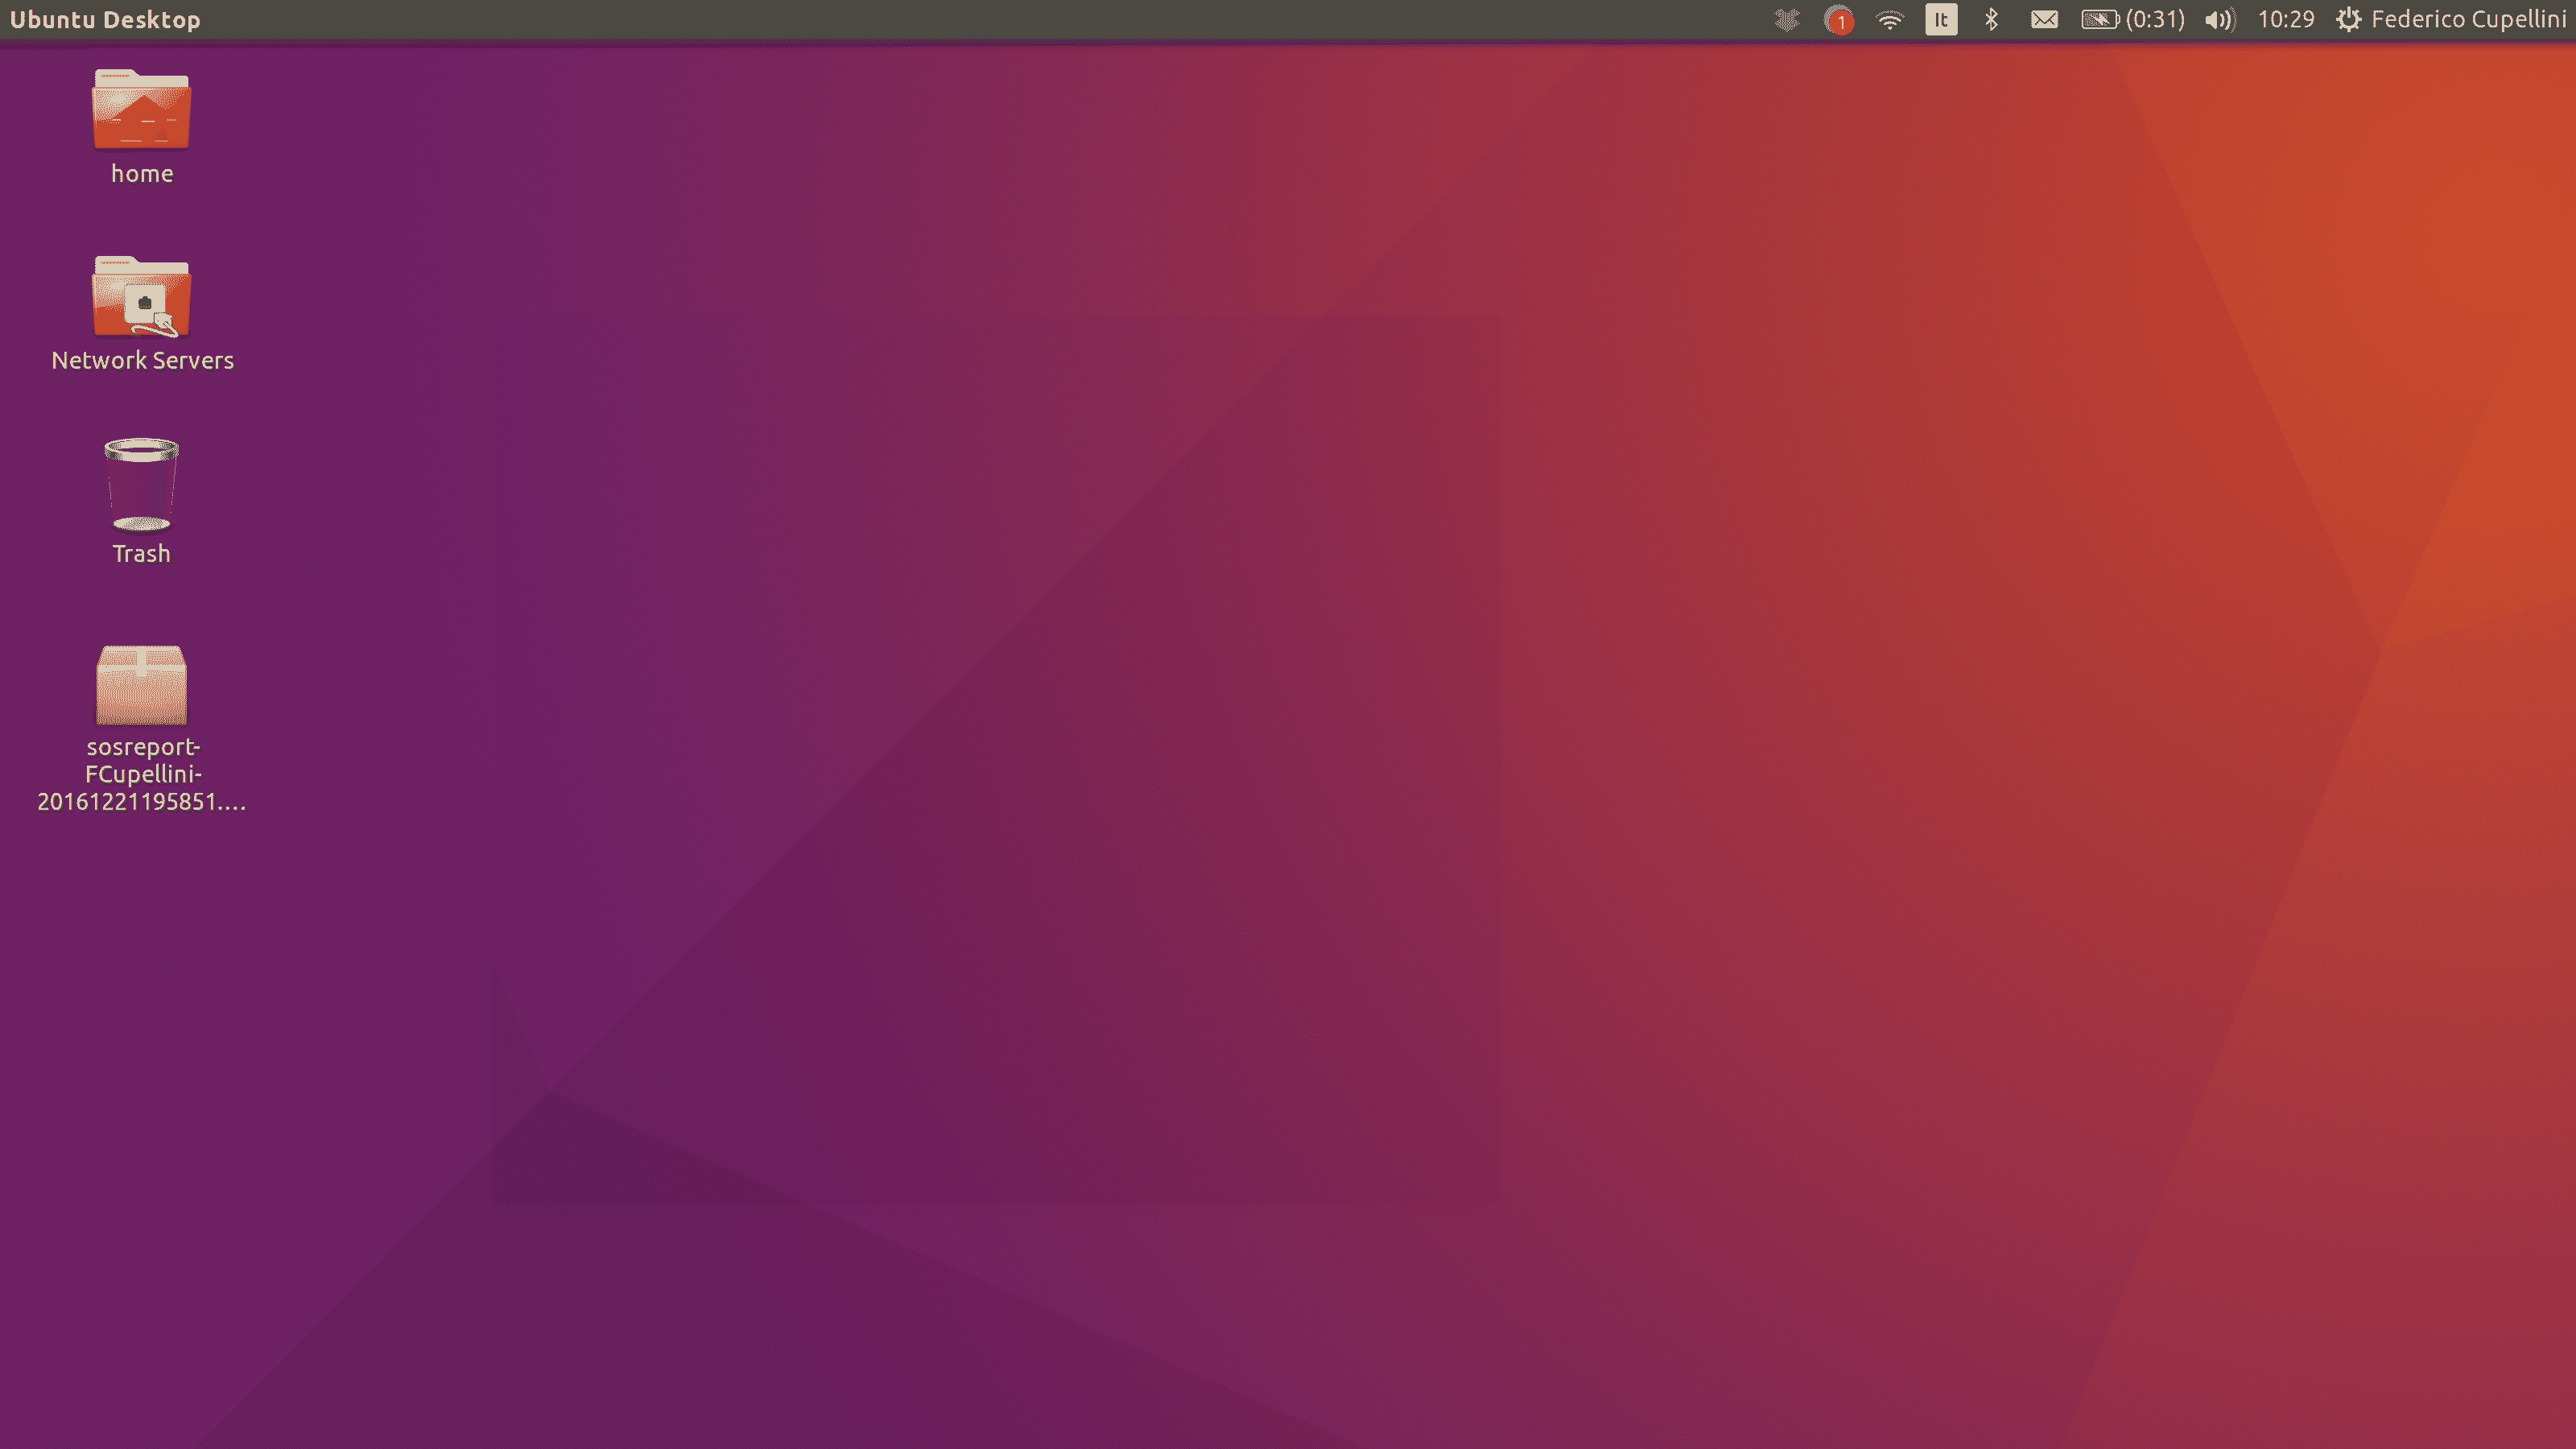 ubuntu download usb free